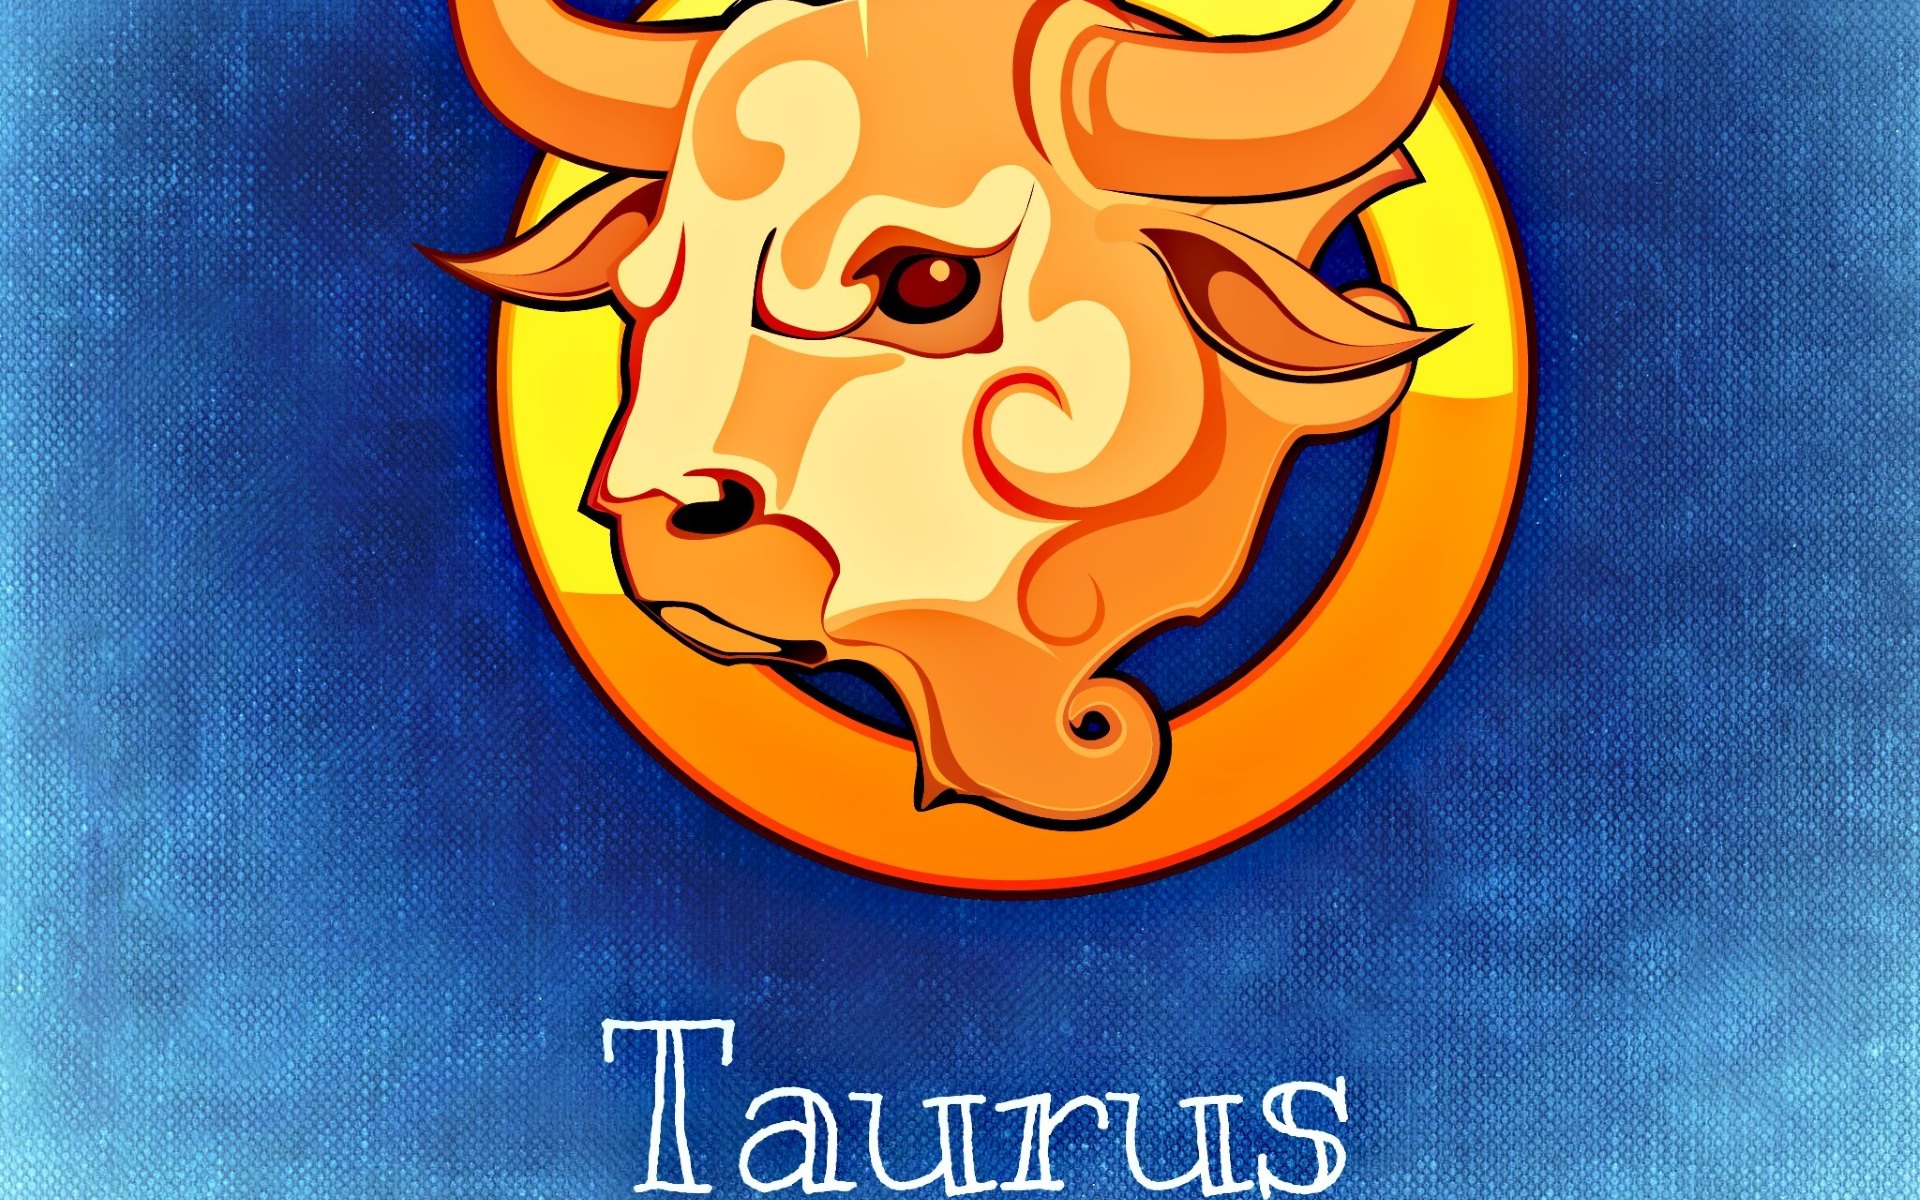 horoscope, artistic, zodiac, astrology, taurus (astrology)